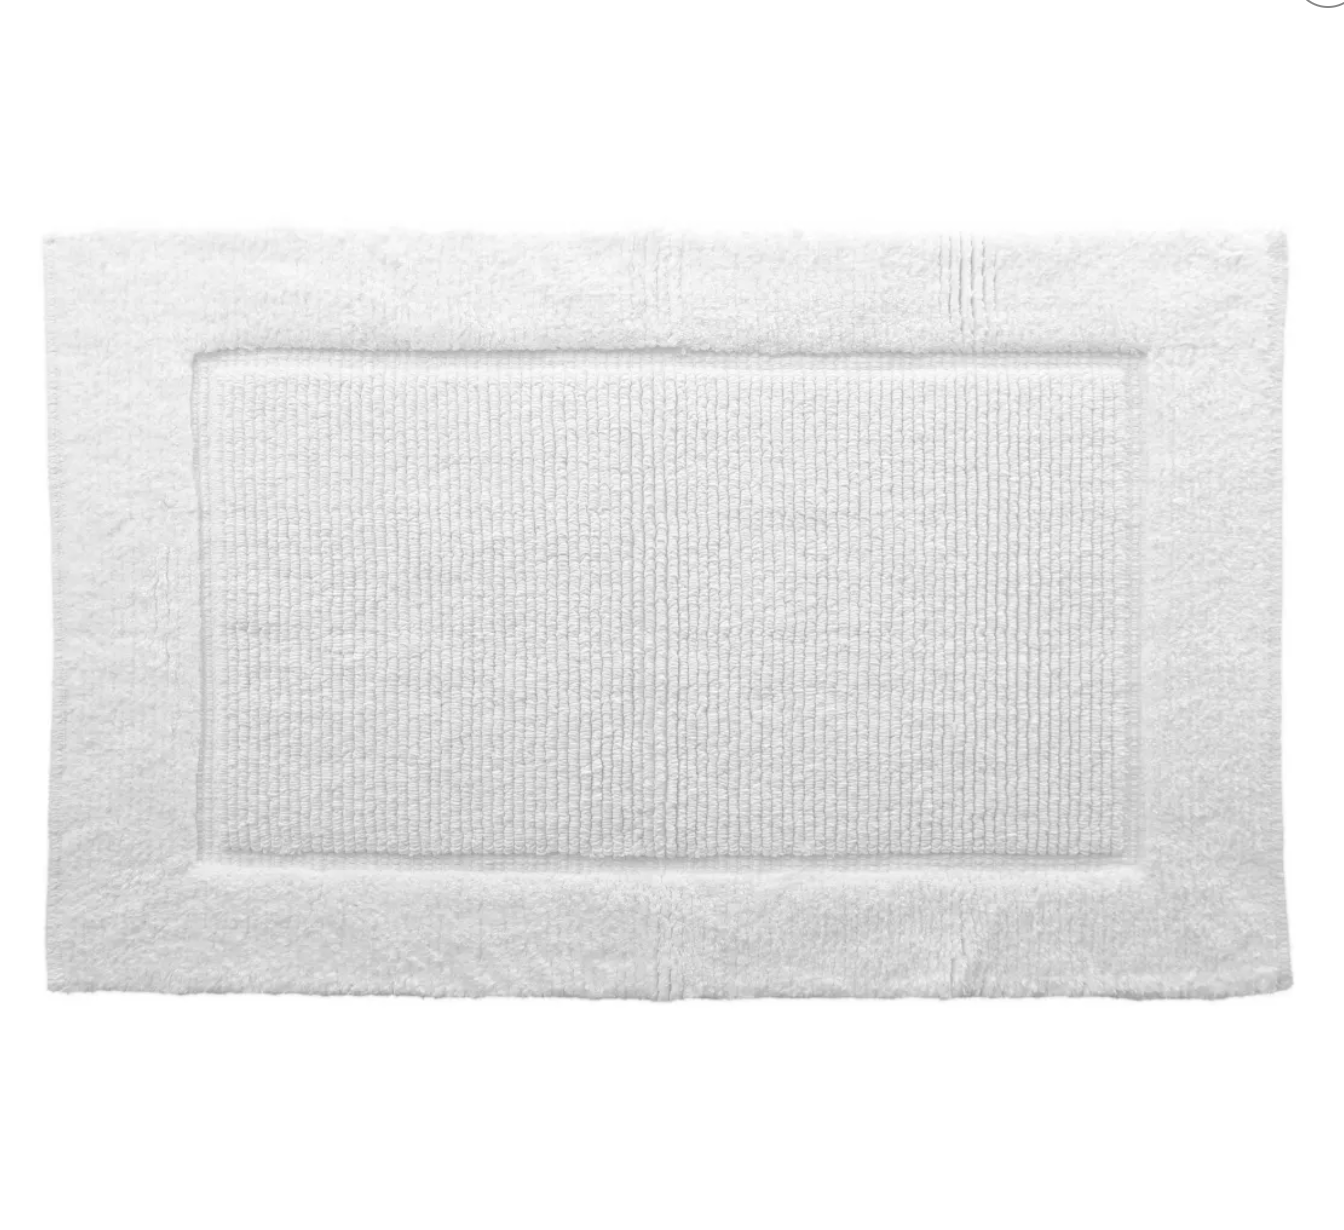 Moda Prima Super-Soft Cotton Bath Mat - 21" x 34" – White